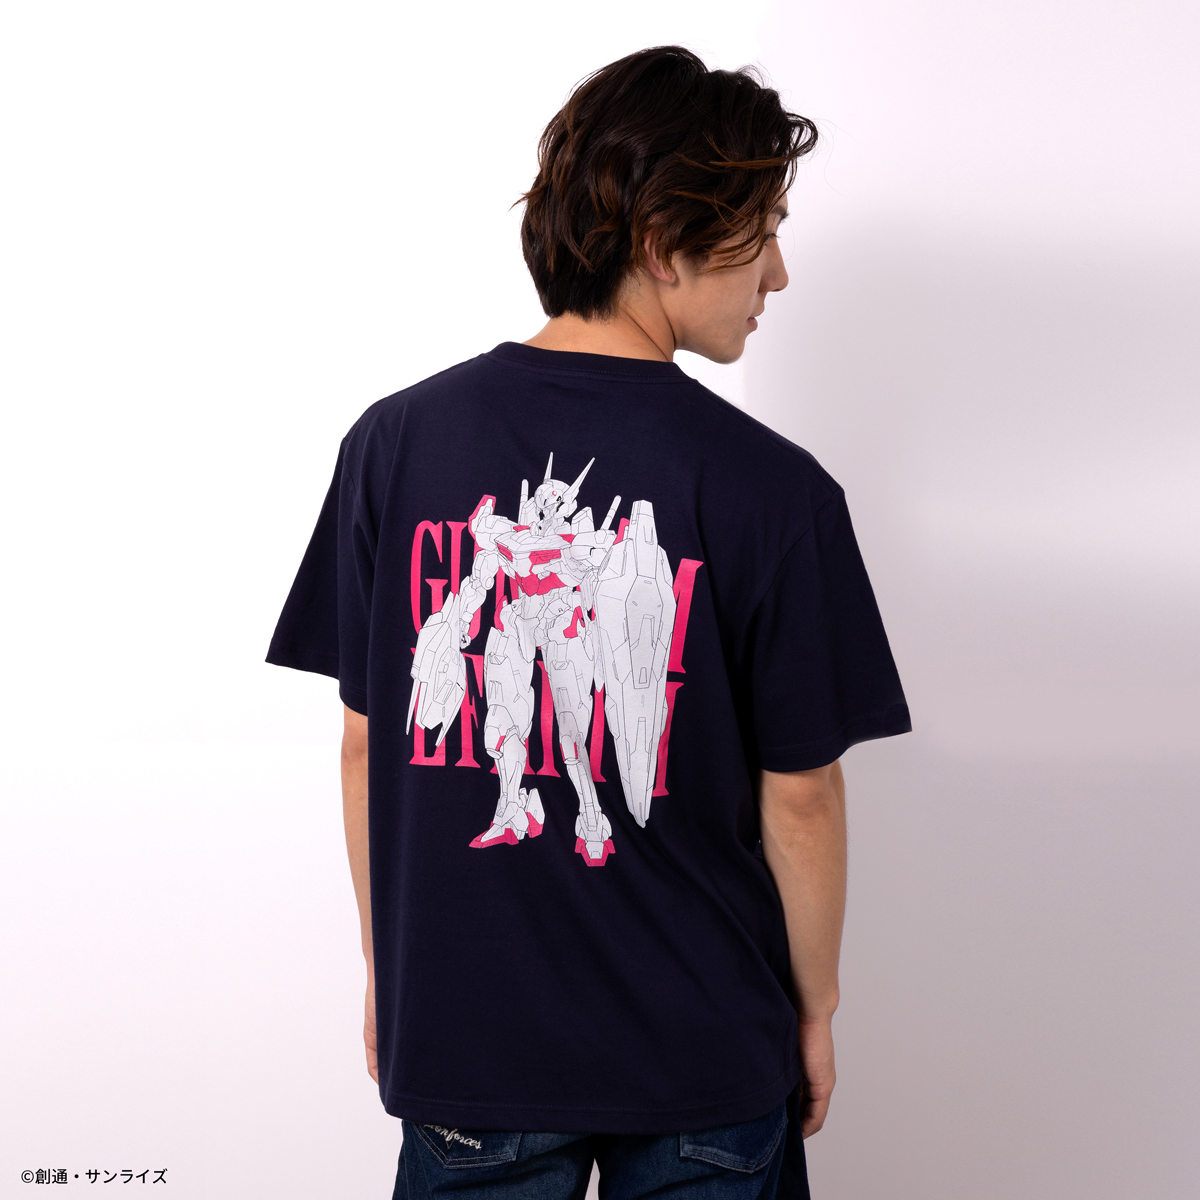 STRICT-G『機動戦士ガンダム 水星の魔女』PROLOGUE Tシャツ ガンダム・ルブリス